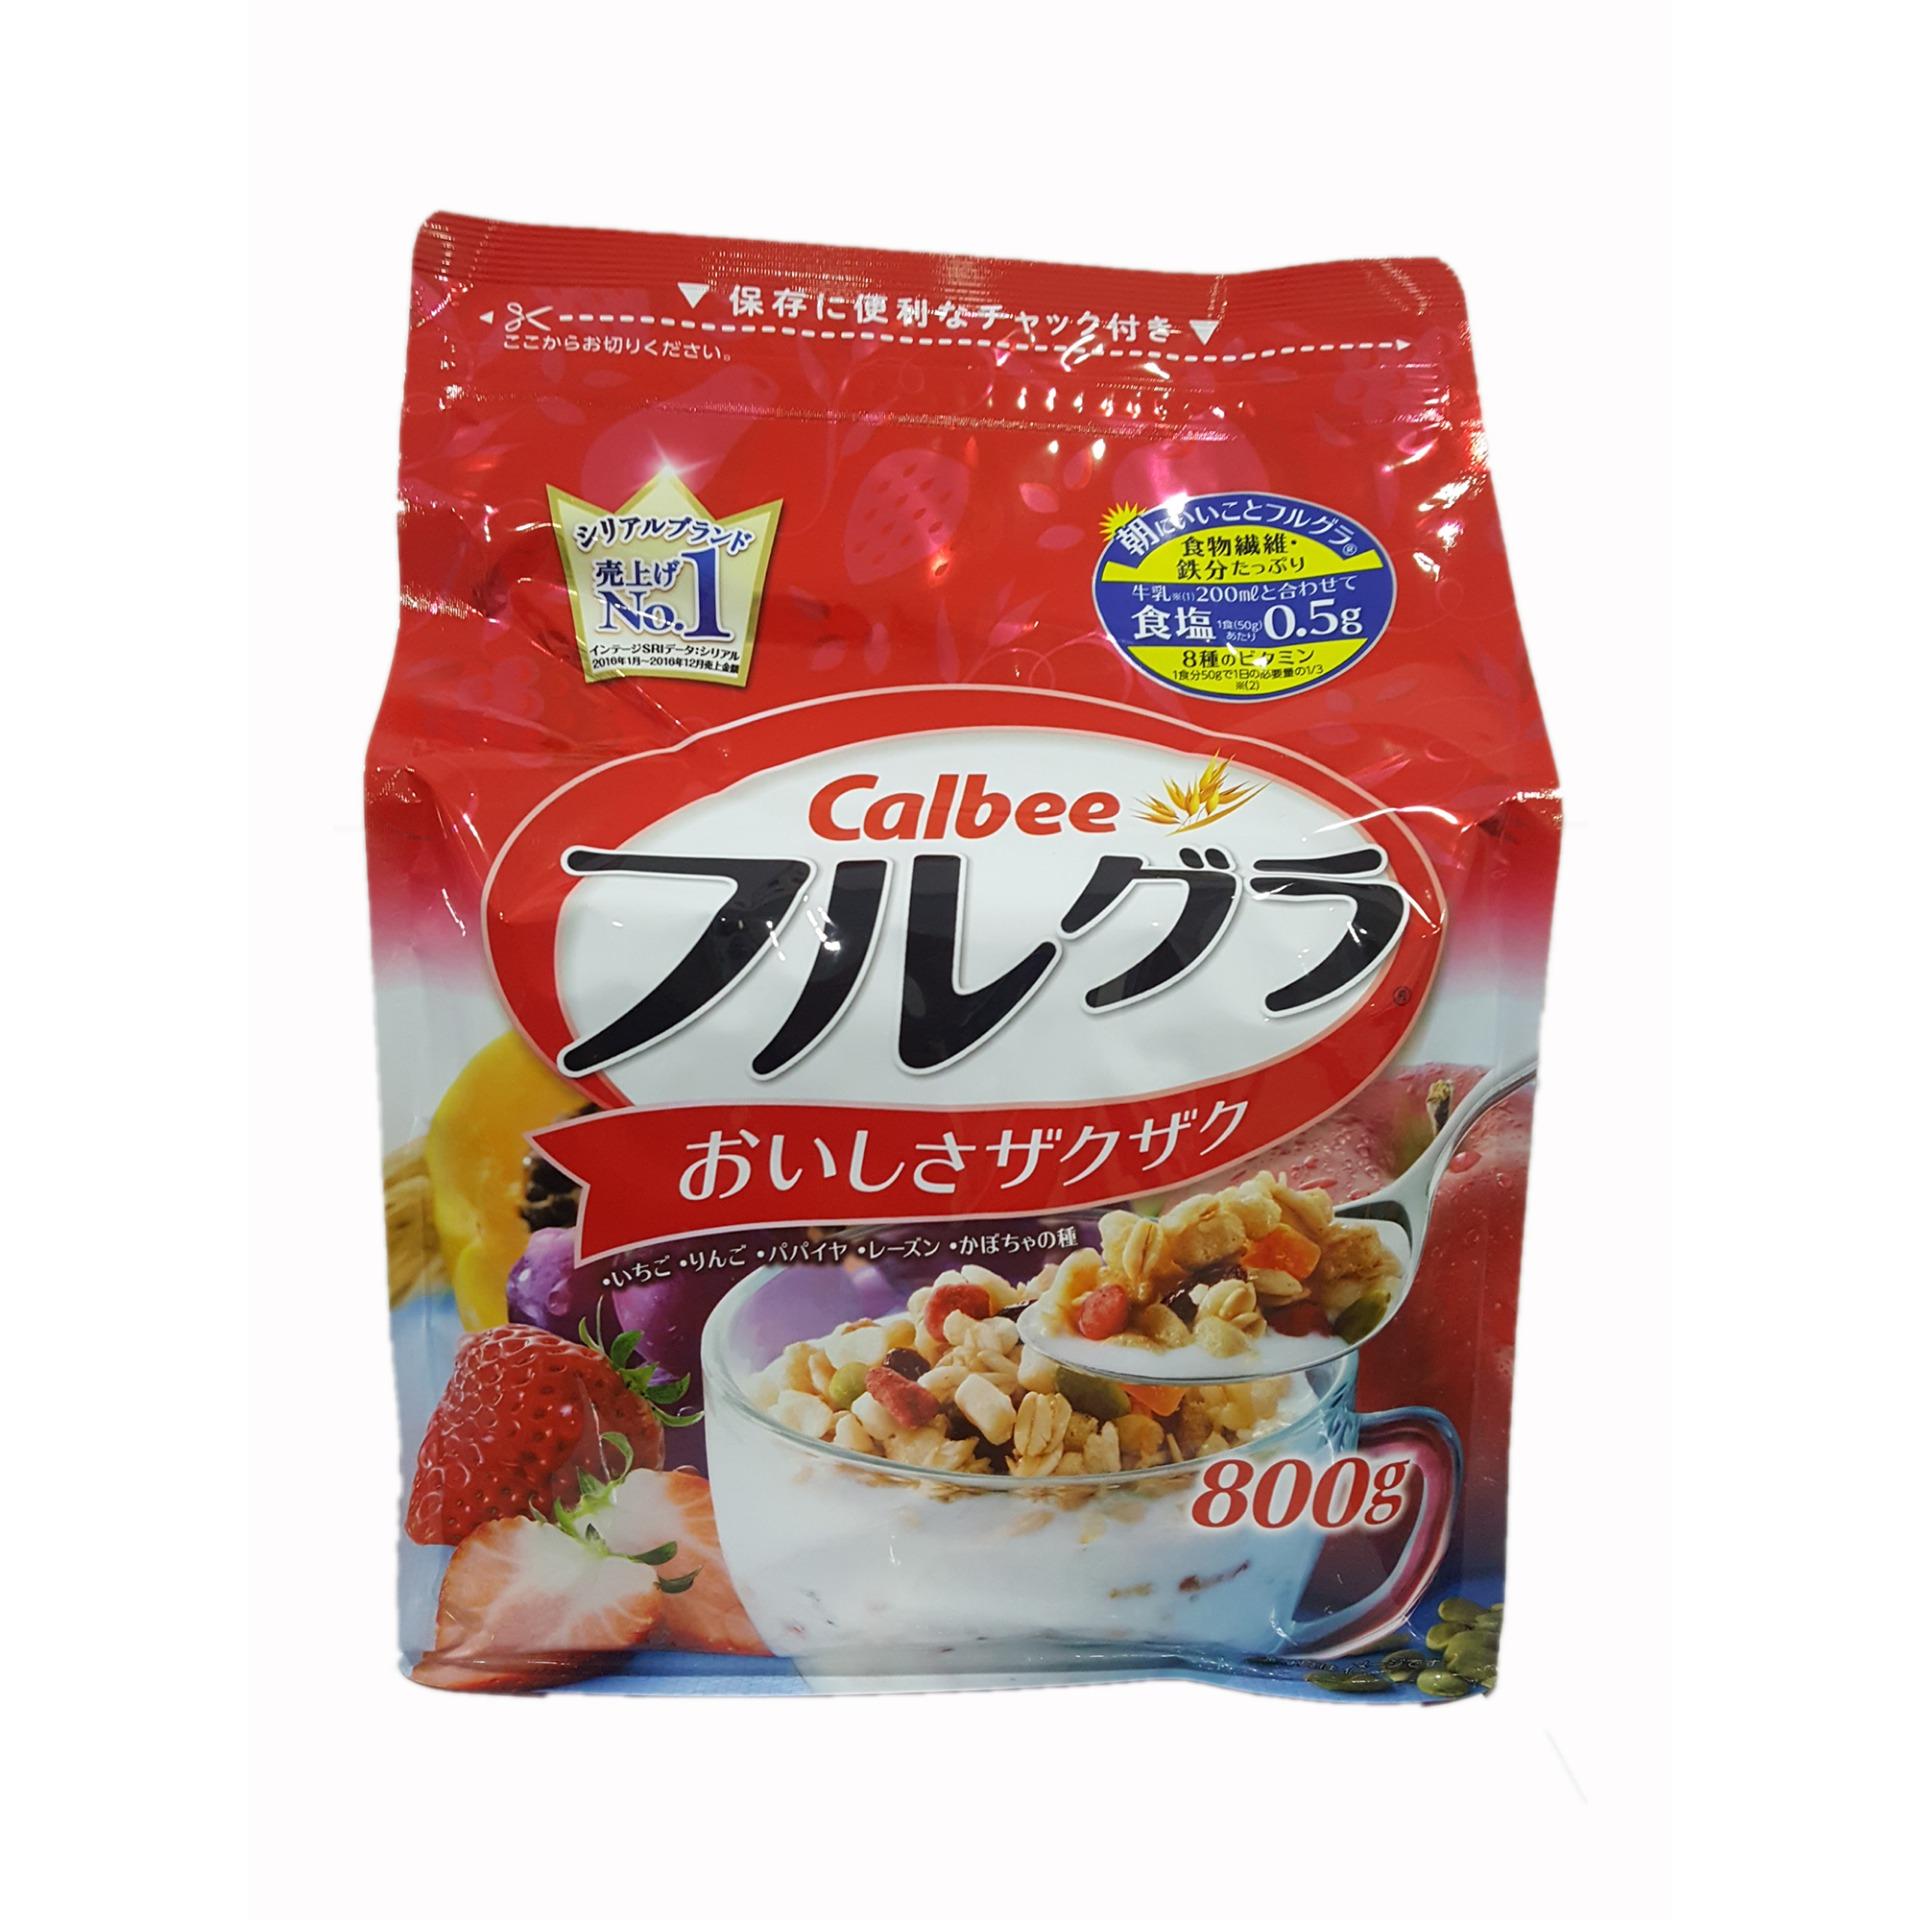 Ngũ cốc Calbee Nhật Bản 800g date T12 2018